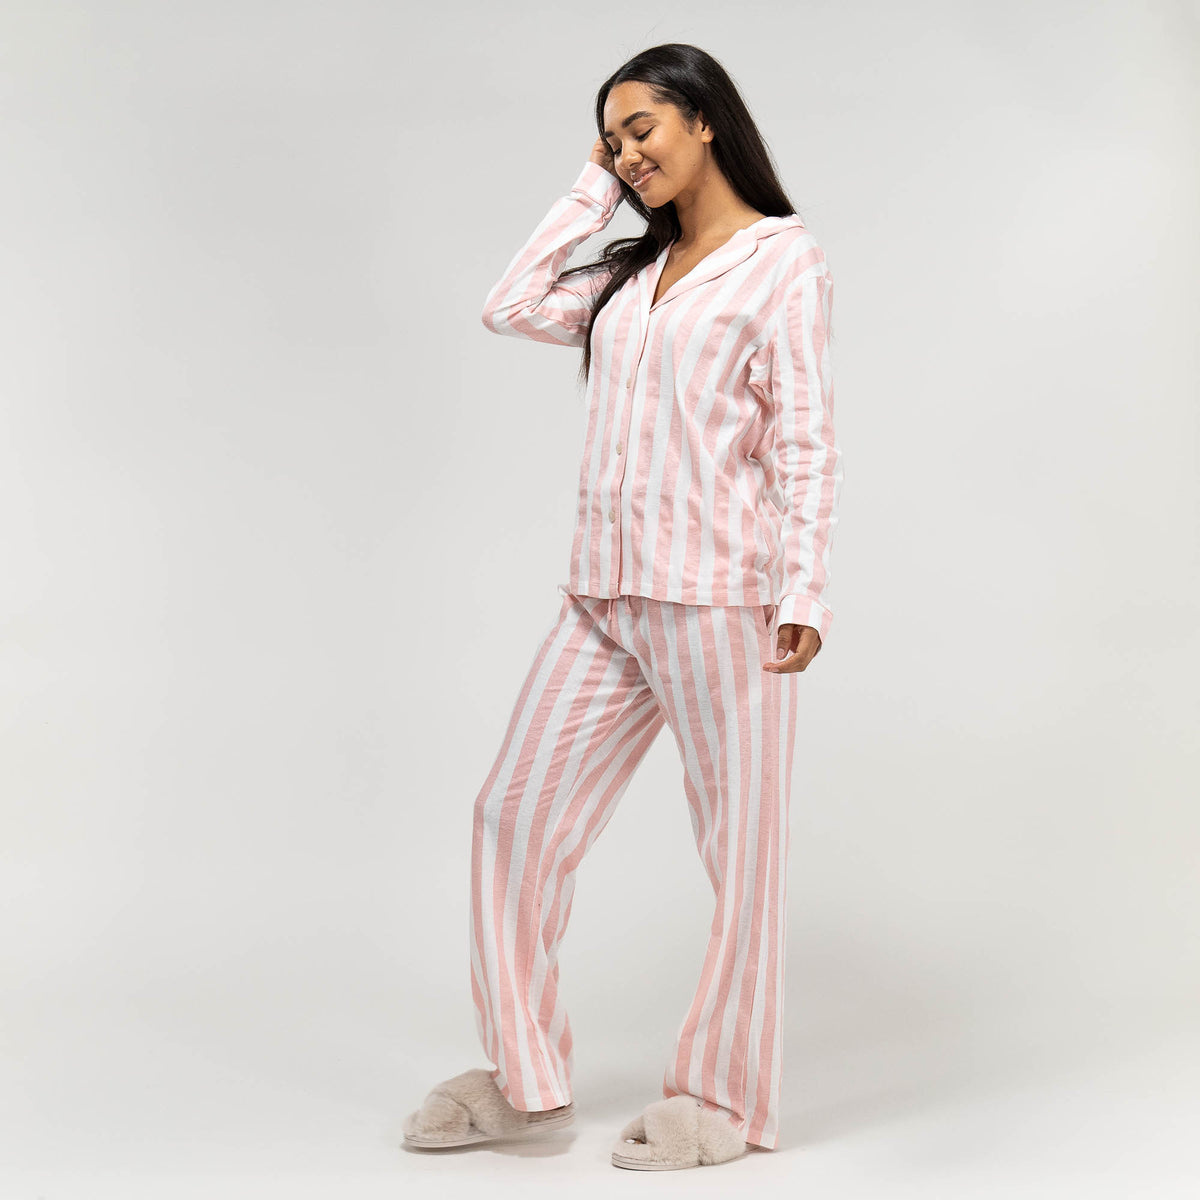 woonadres Boost Onverbiddelijk Jersey Dames Pyjama Streep, Maat: XS-L, Roze / Wit– Big Bertha Original NL